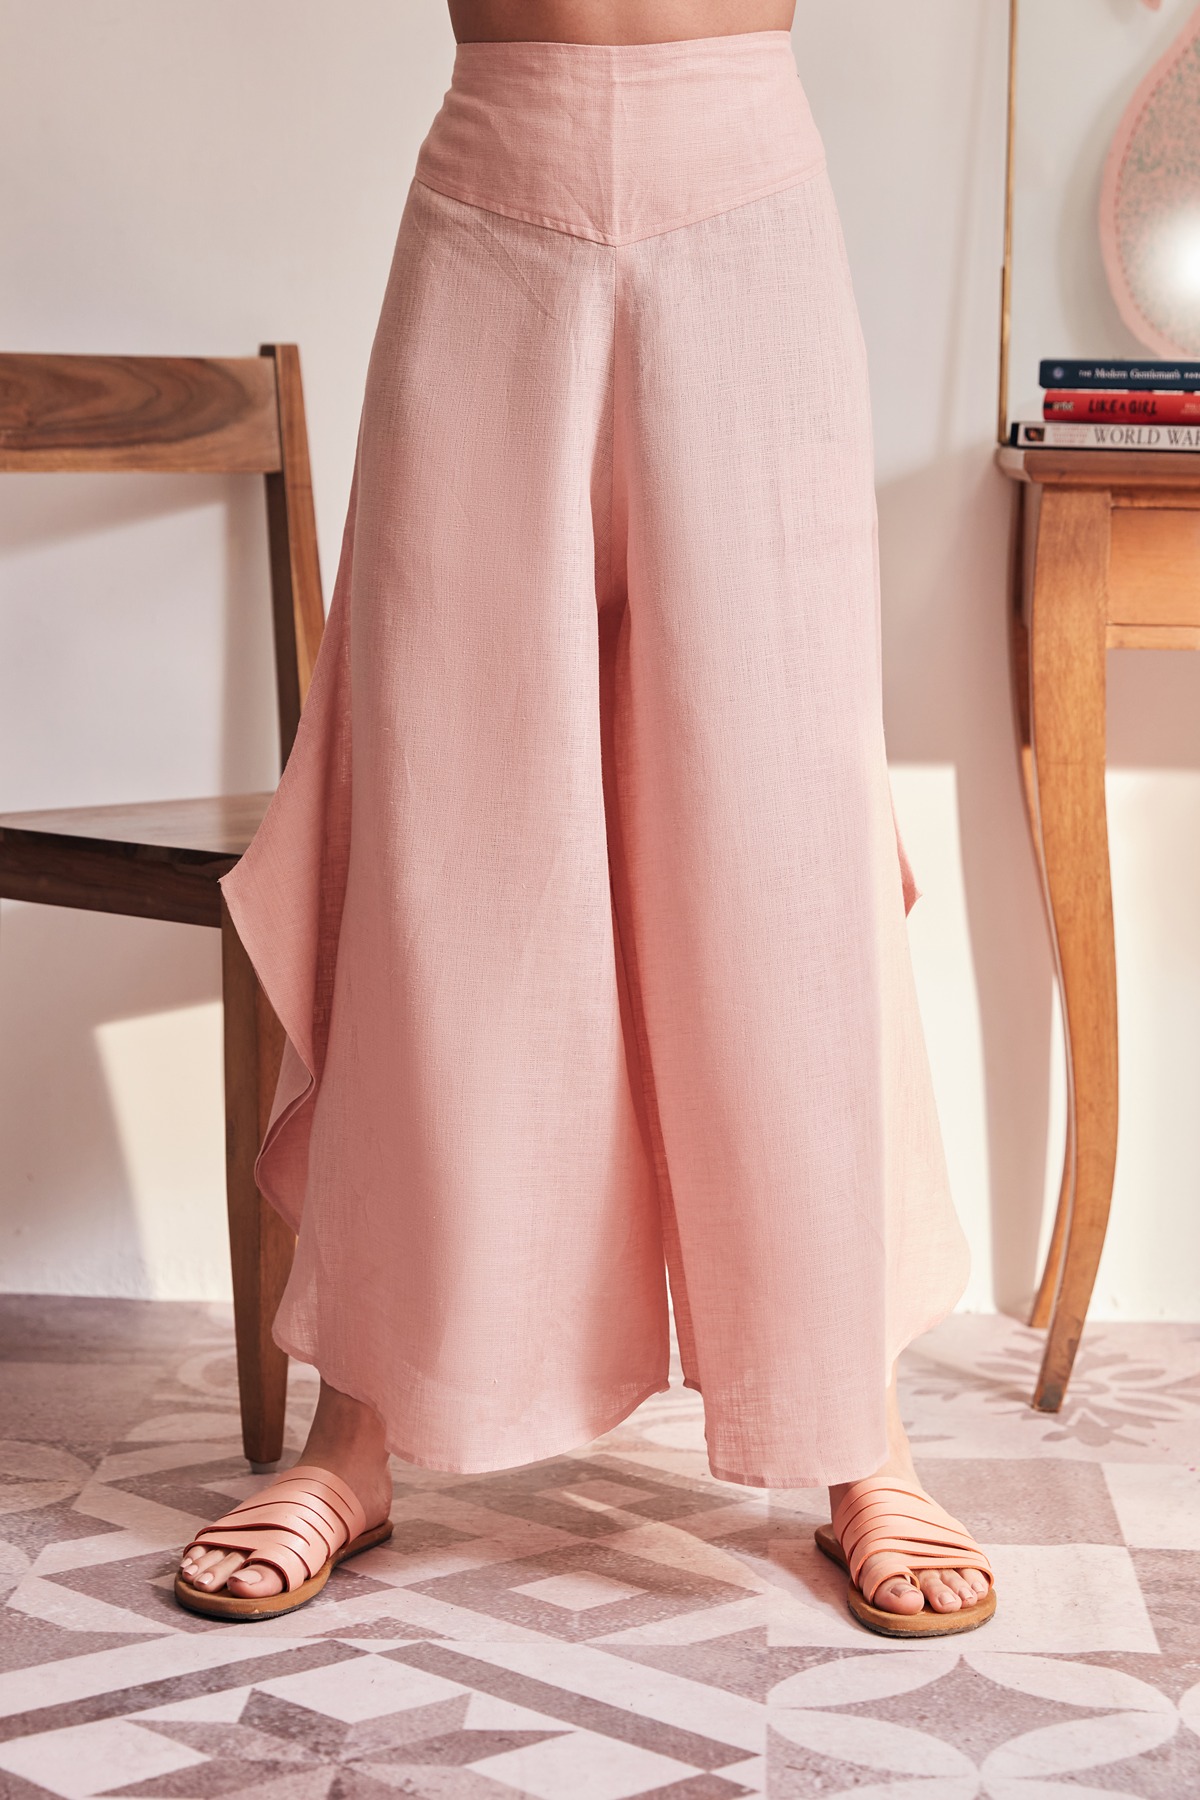 Together Women's Peach Linen/Cotton Pants, Lined, Side Zipper Closure -  Size 10 | eBay